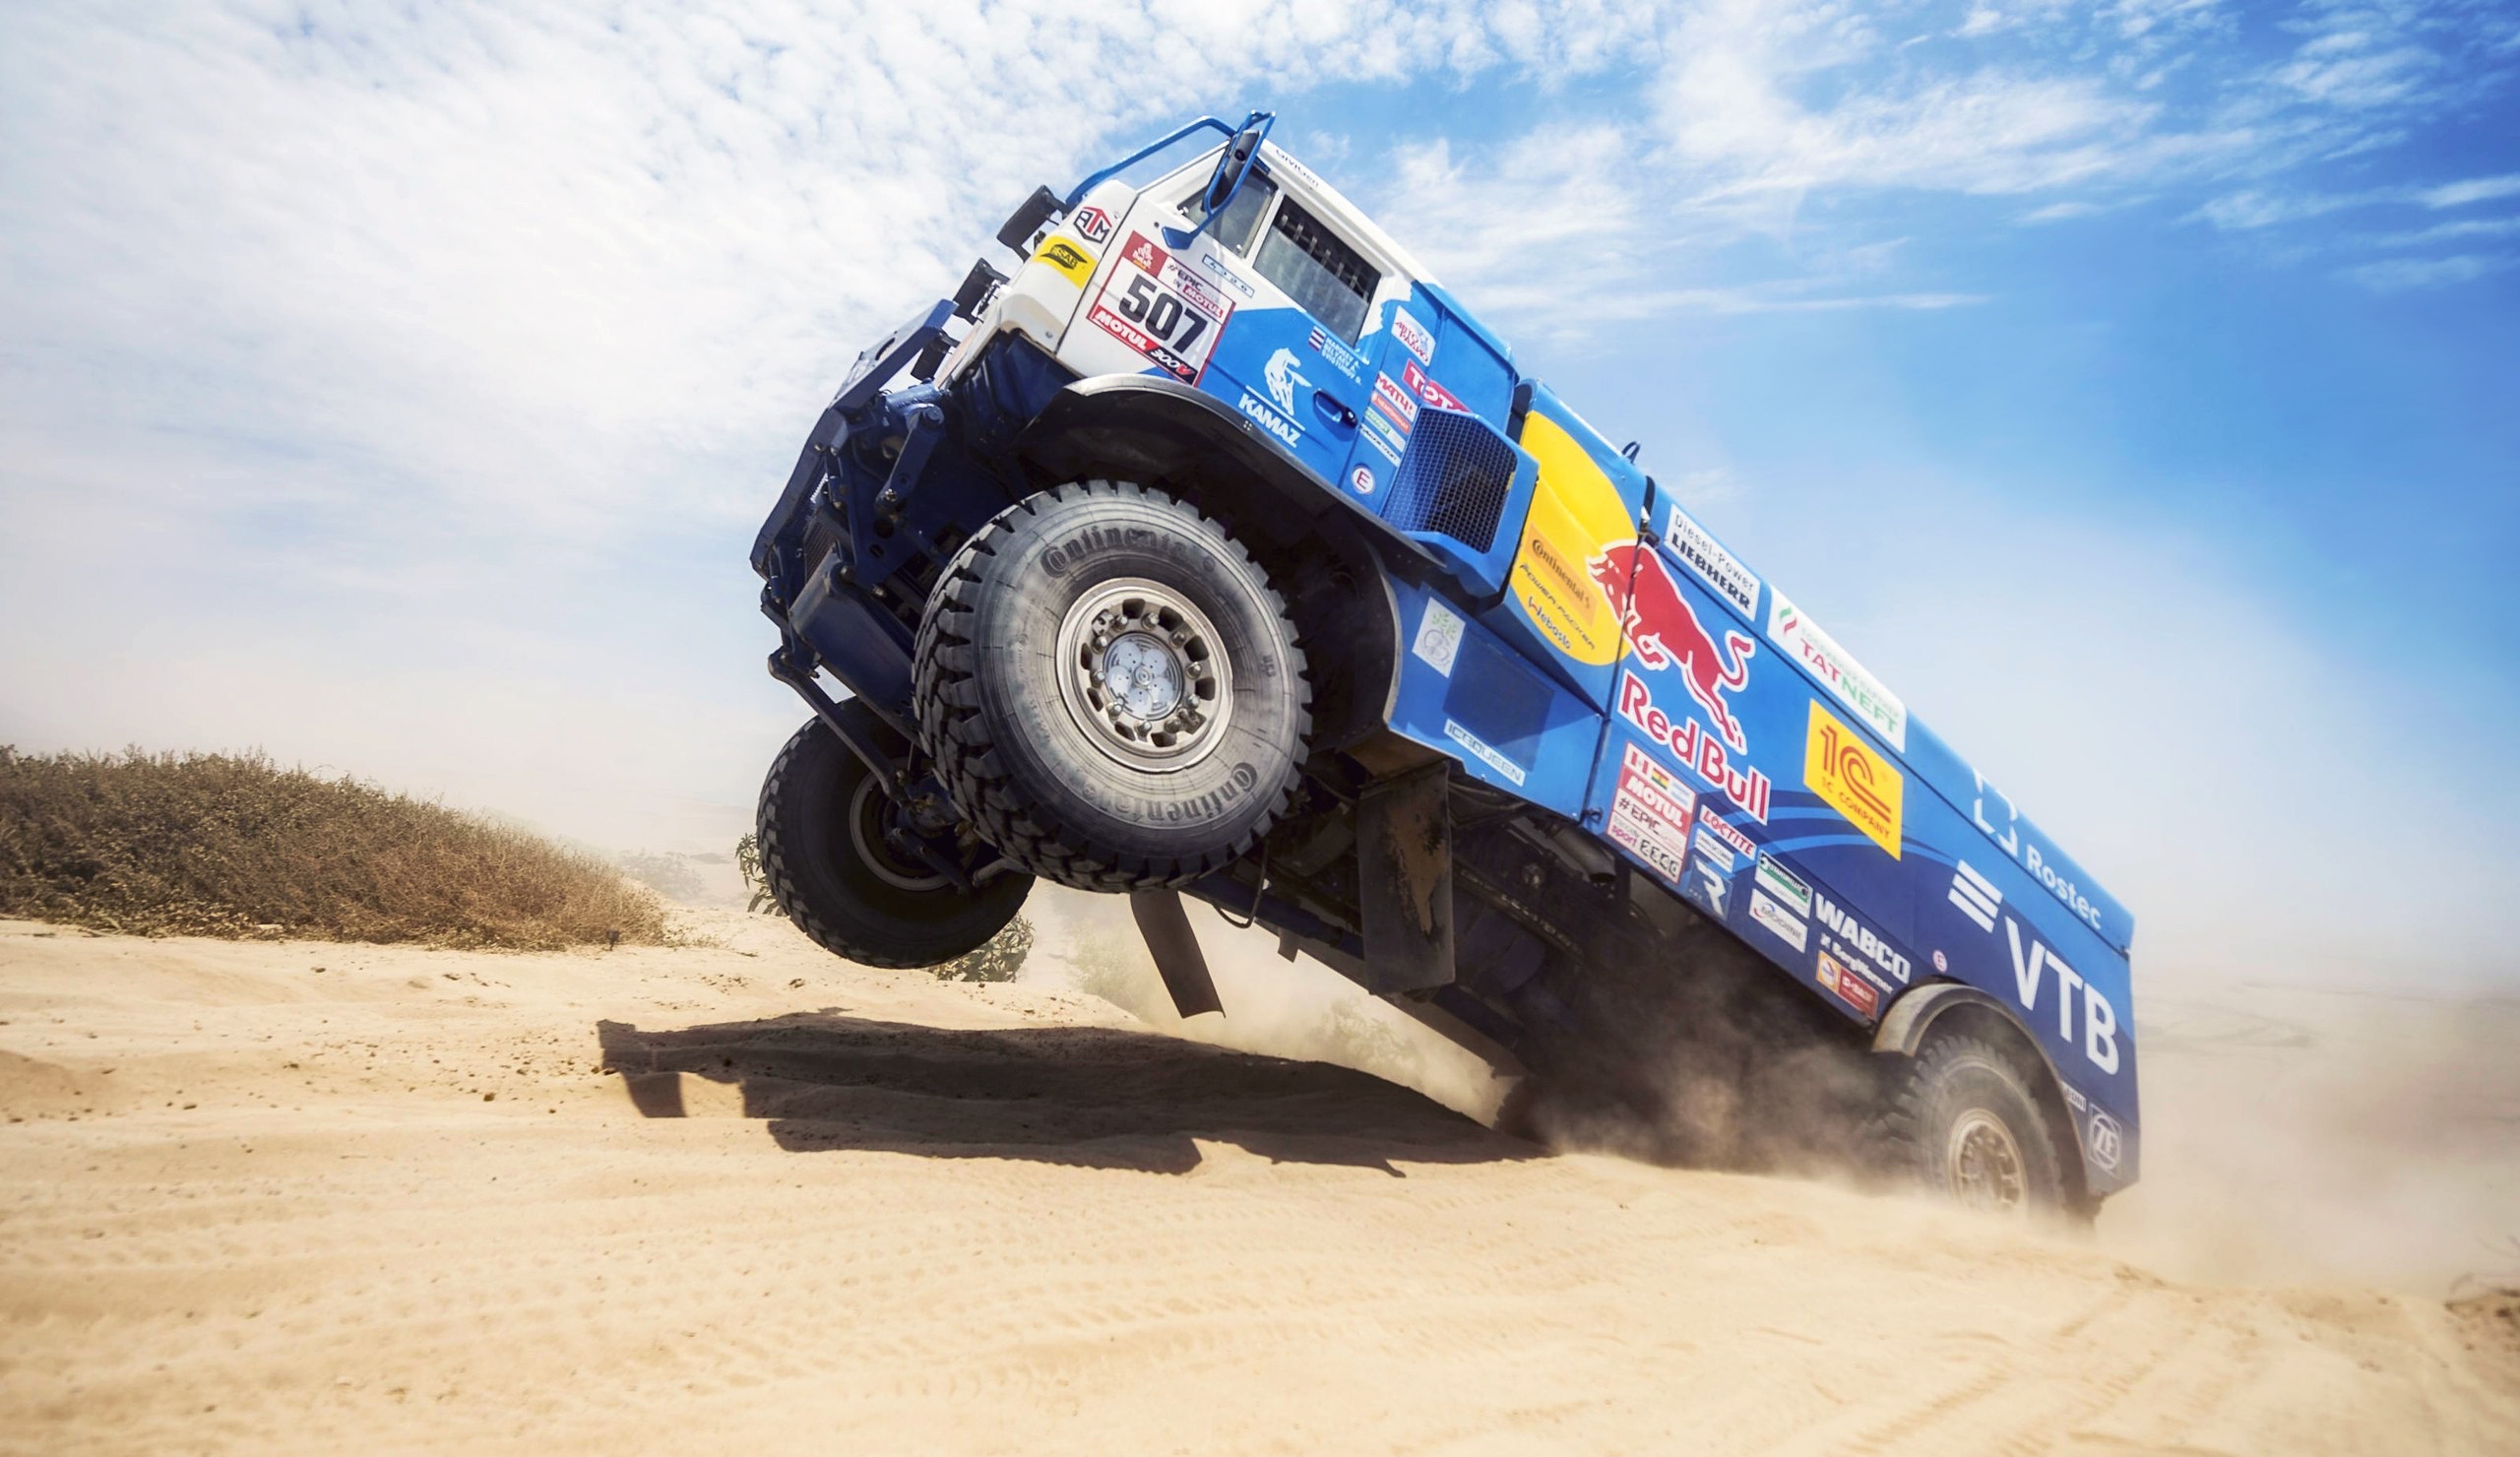 Vehicle Dakar rally, Aniac wallpaper, Exhilarating adventure, Powerful machines, 2560x1480 HD Desktop